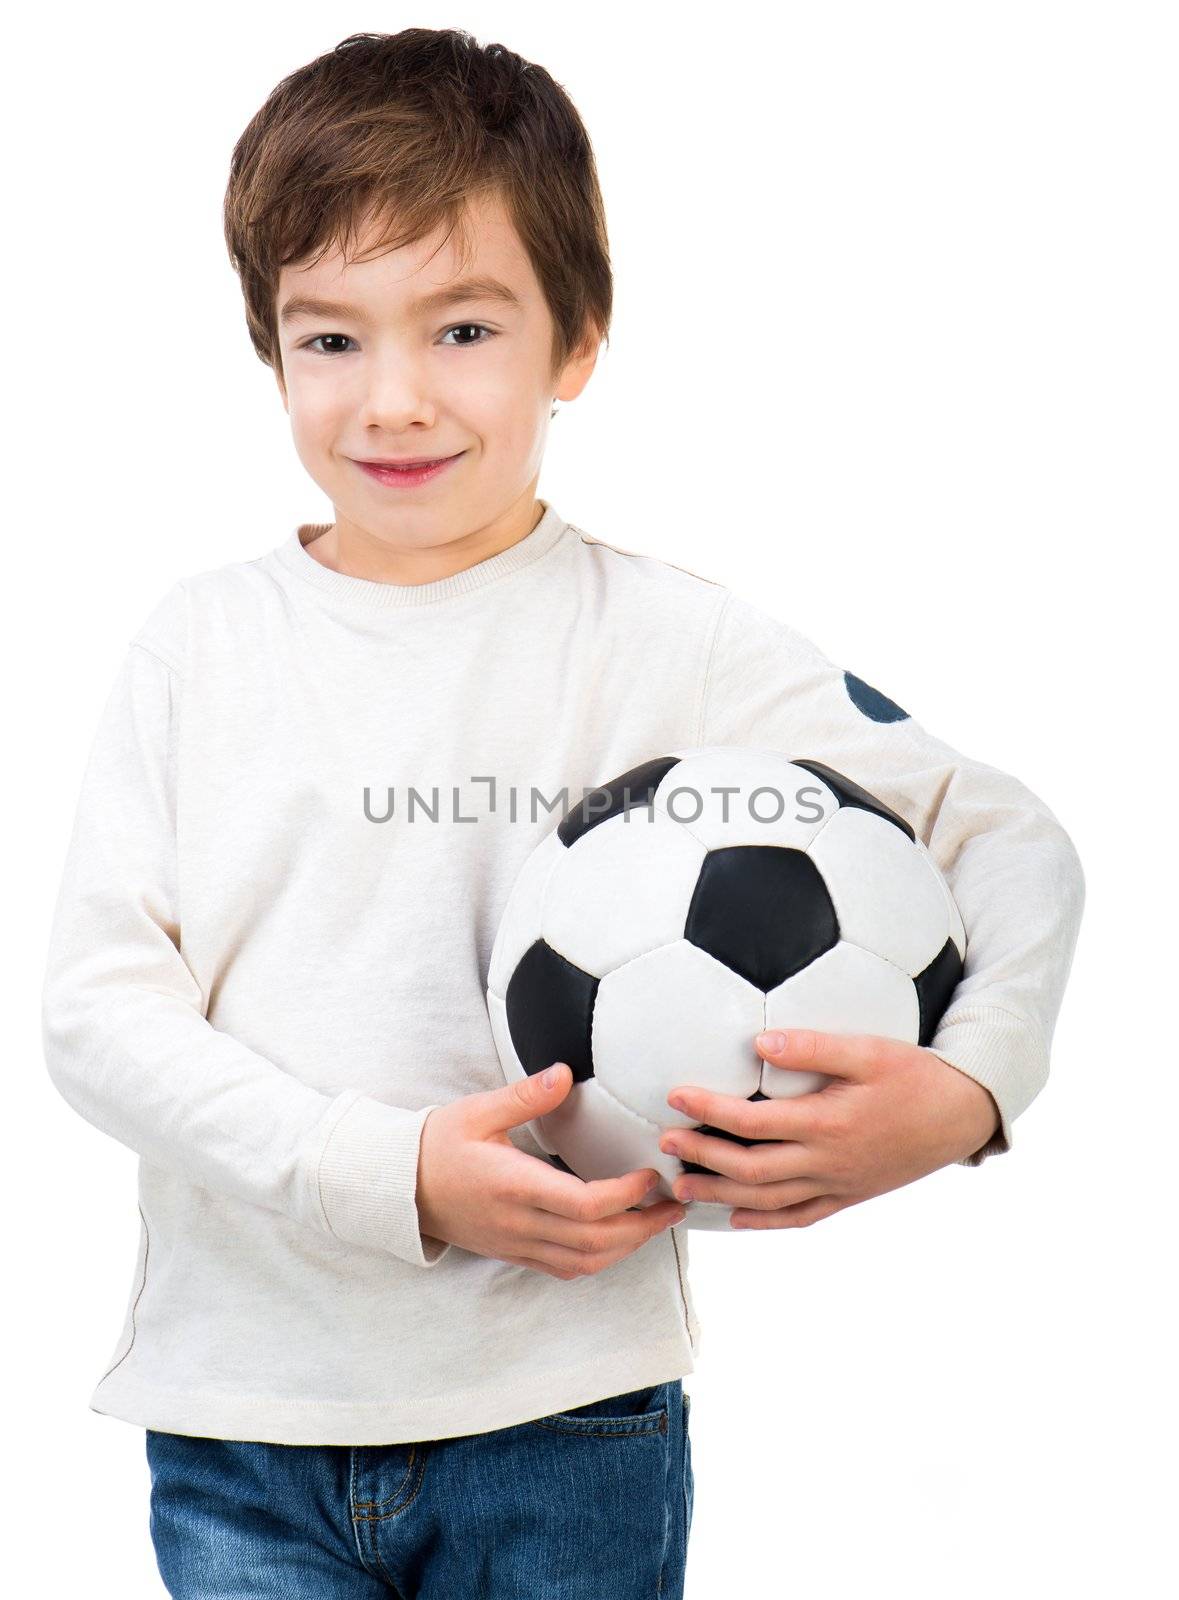 Little boy playing soccer ball by GekaSkr